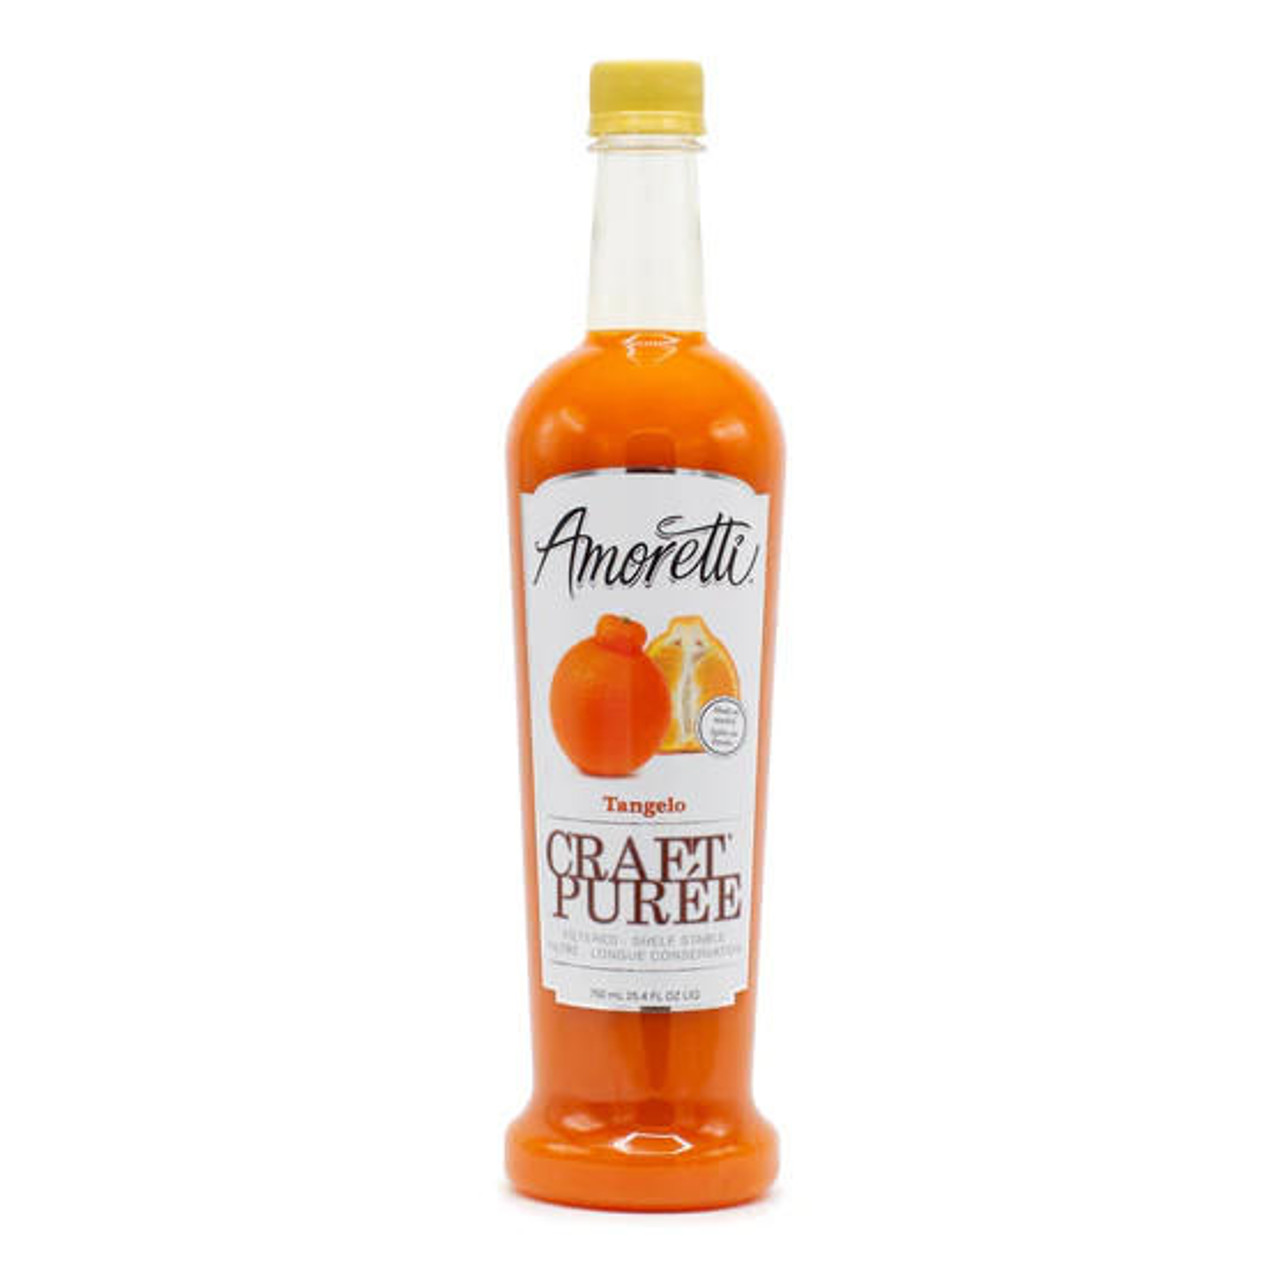 AMORETTI Amoretti Fresh Citrus-Y Essence of Tangelo Craft Puree 1 Gallon 